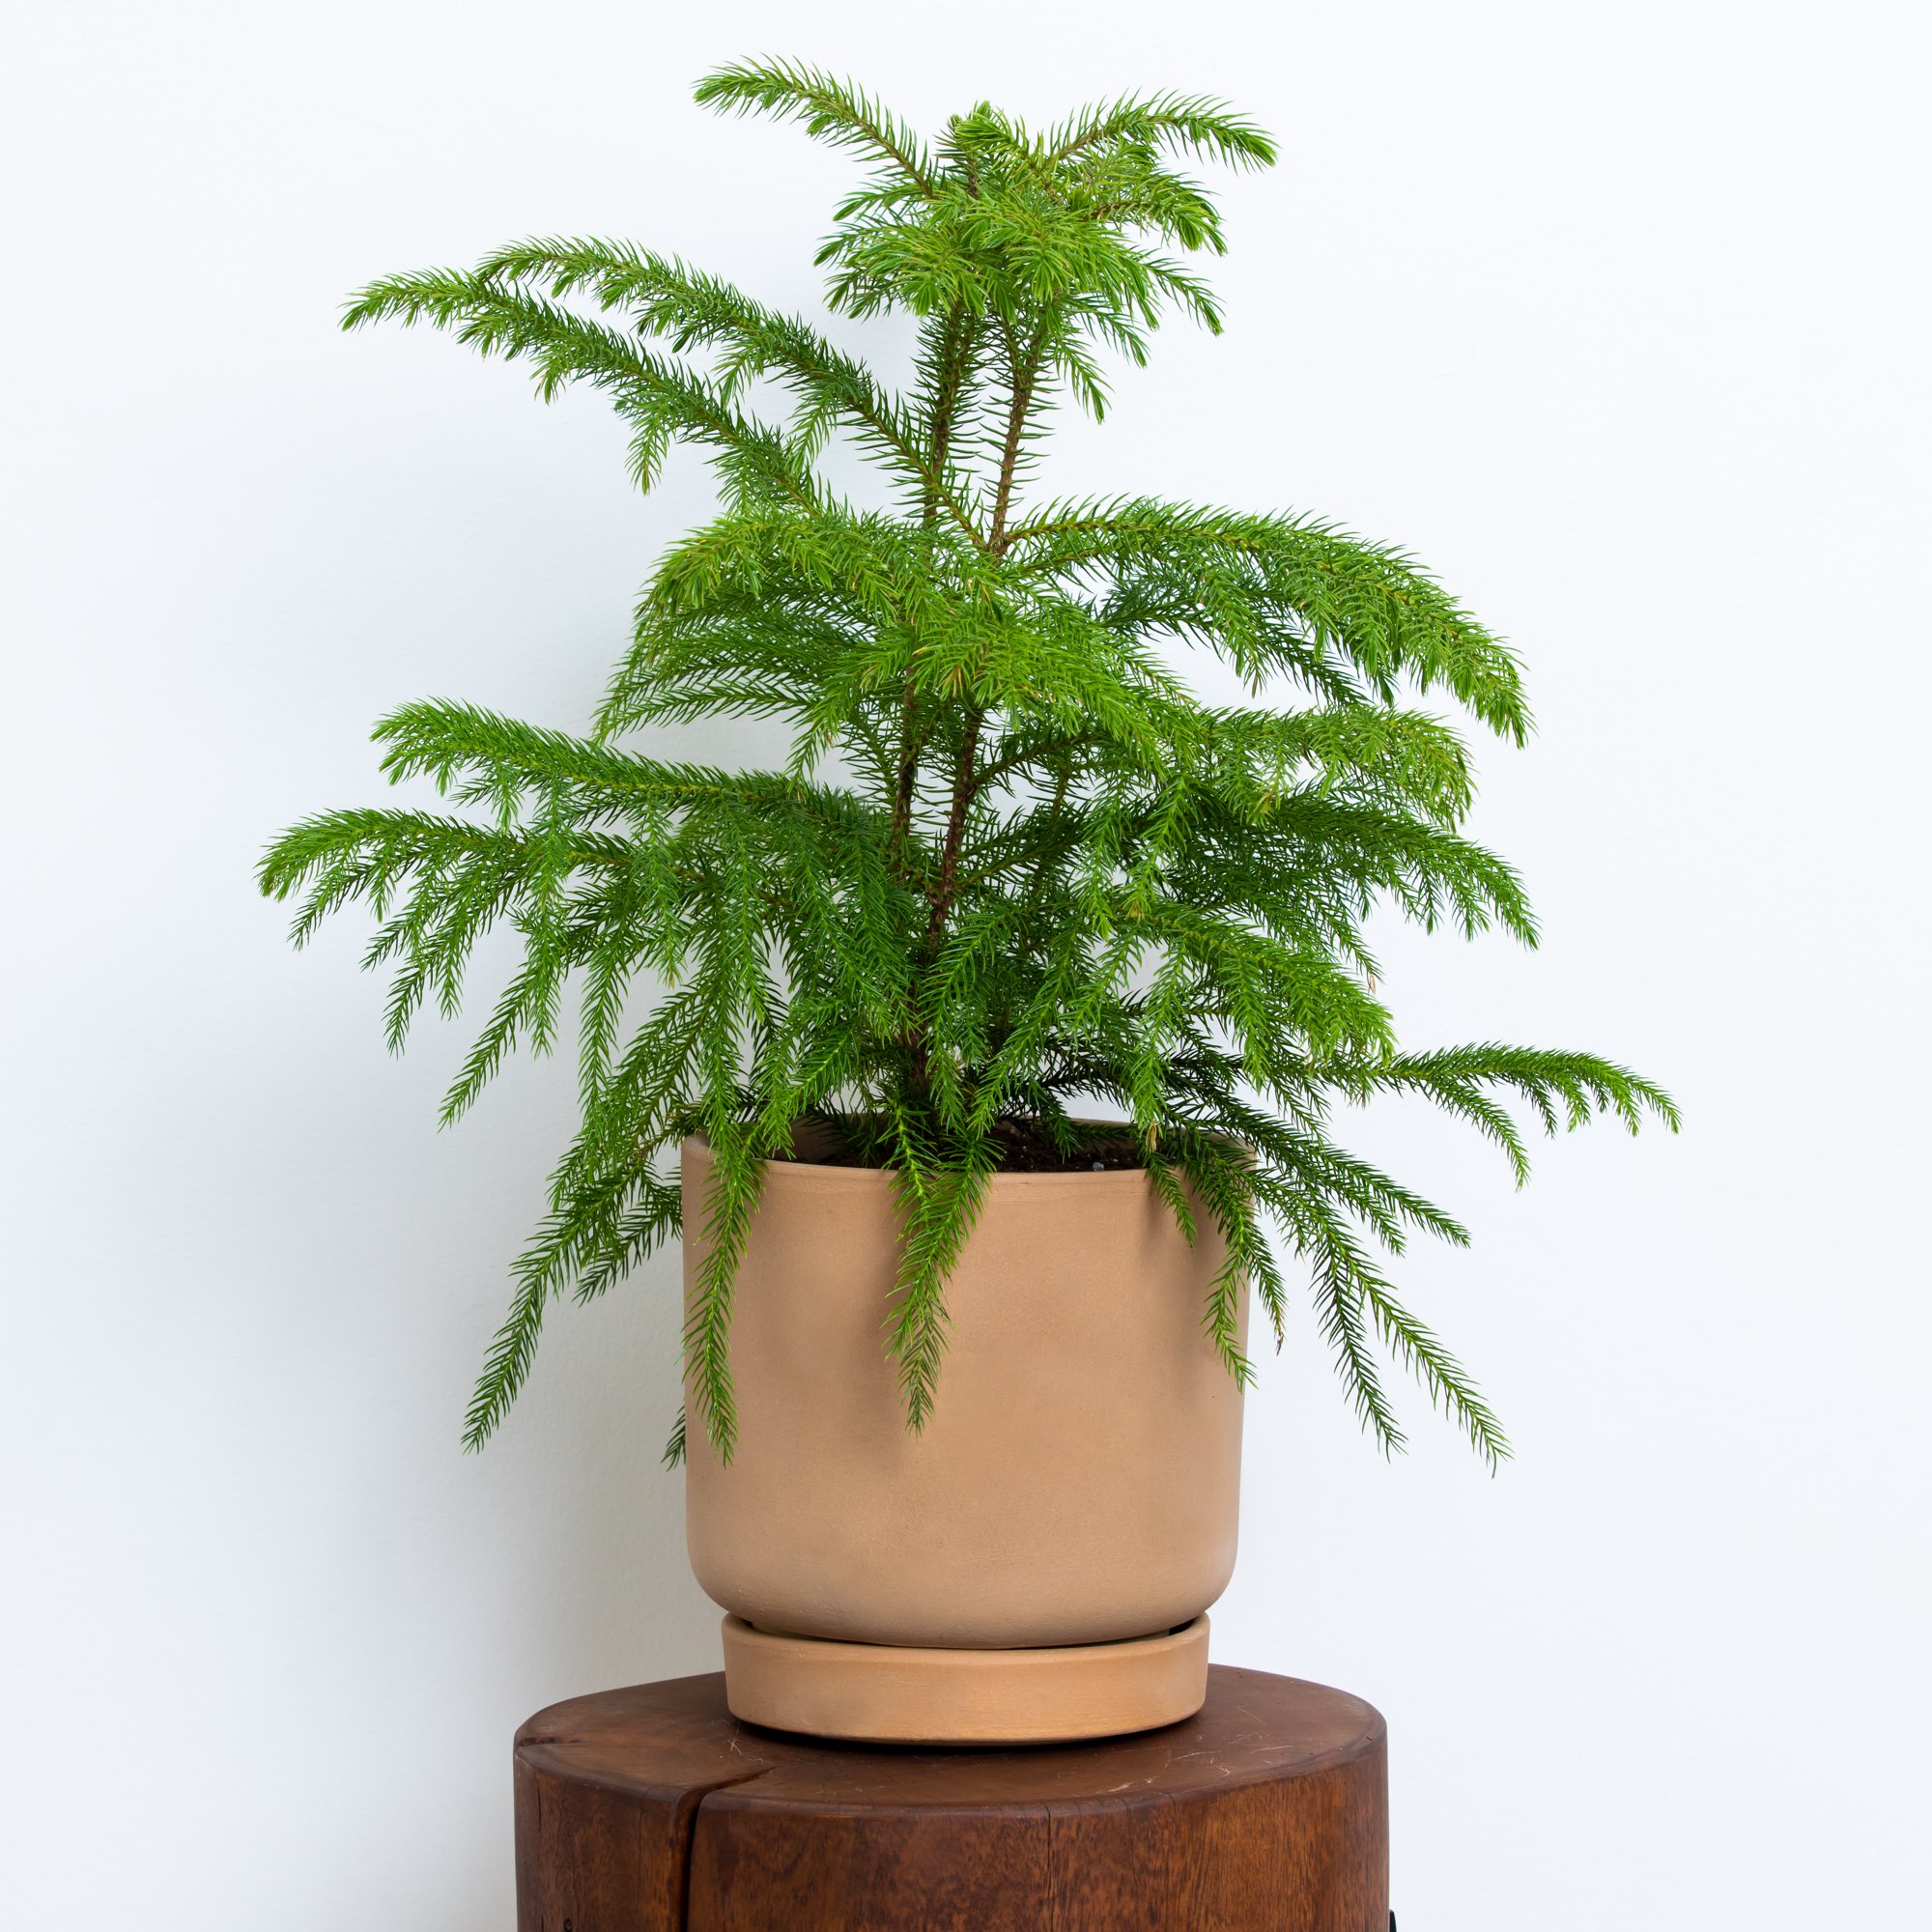 Greendigs Norfolk Island Pine Plant